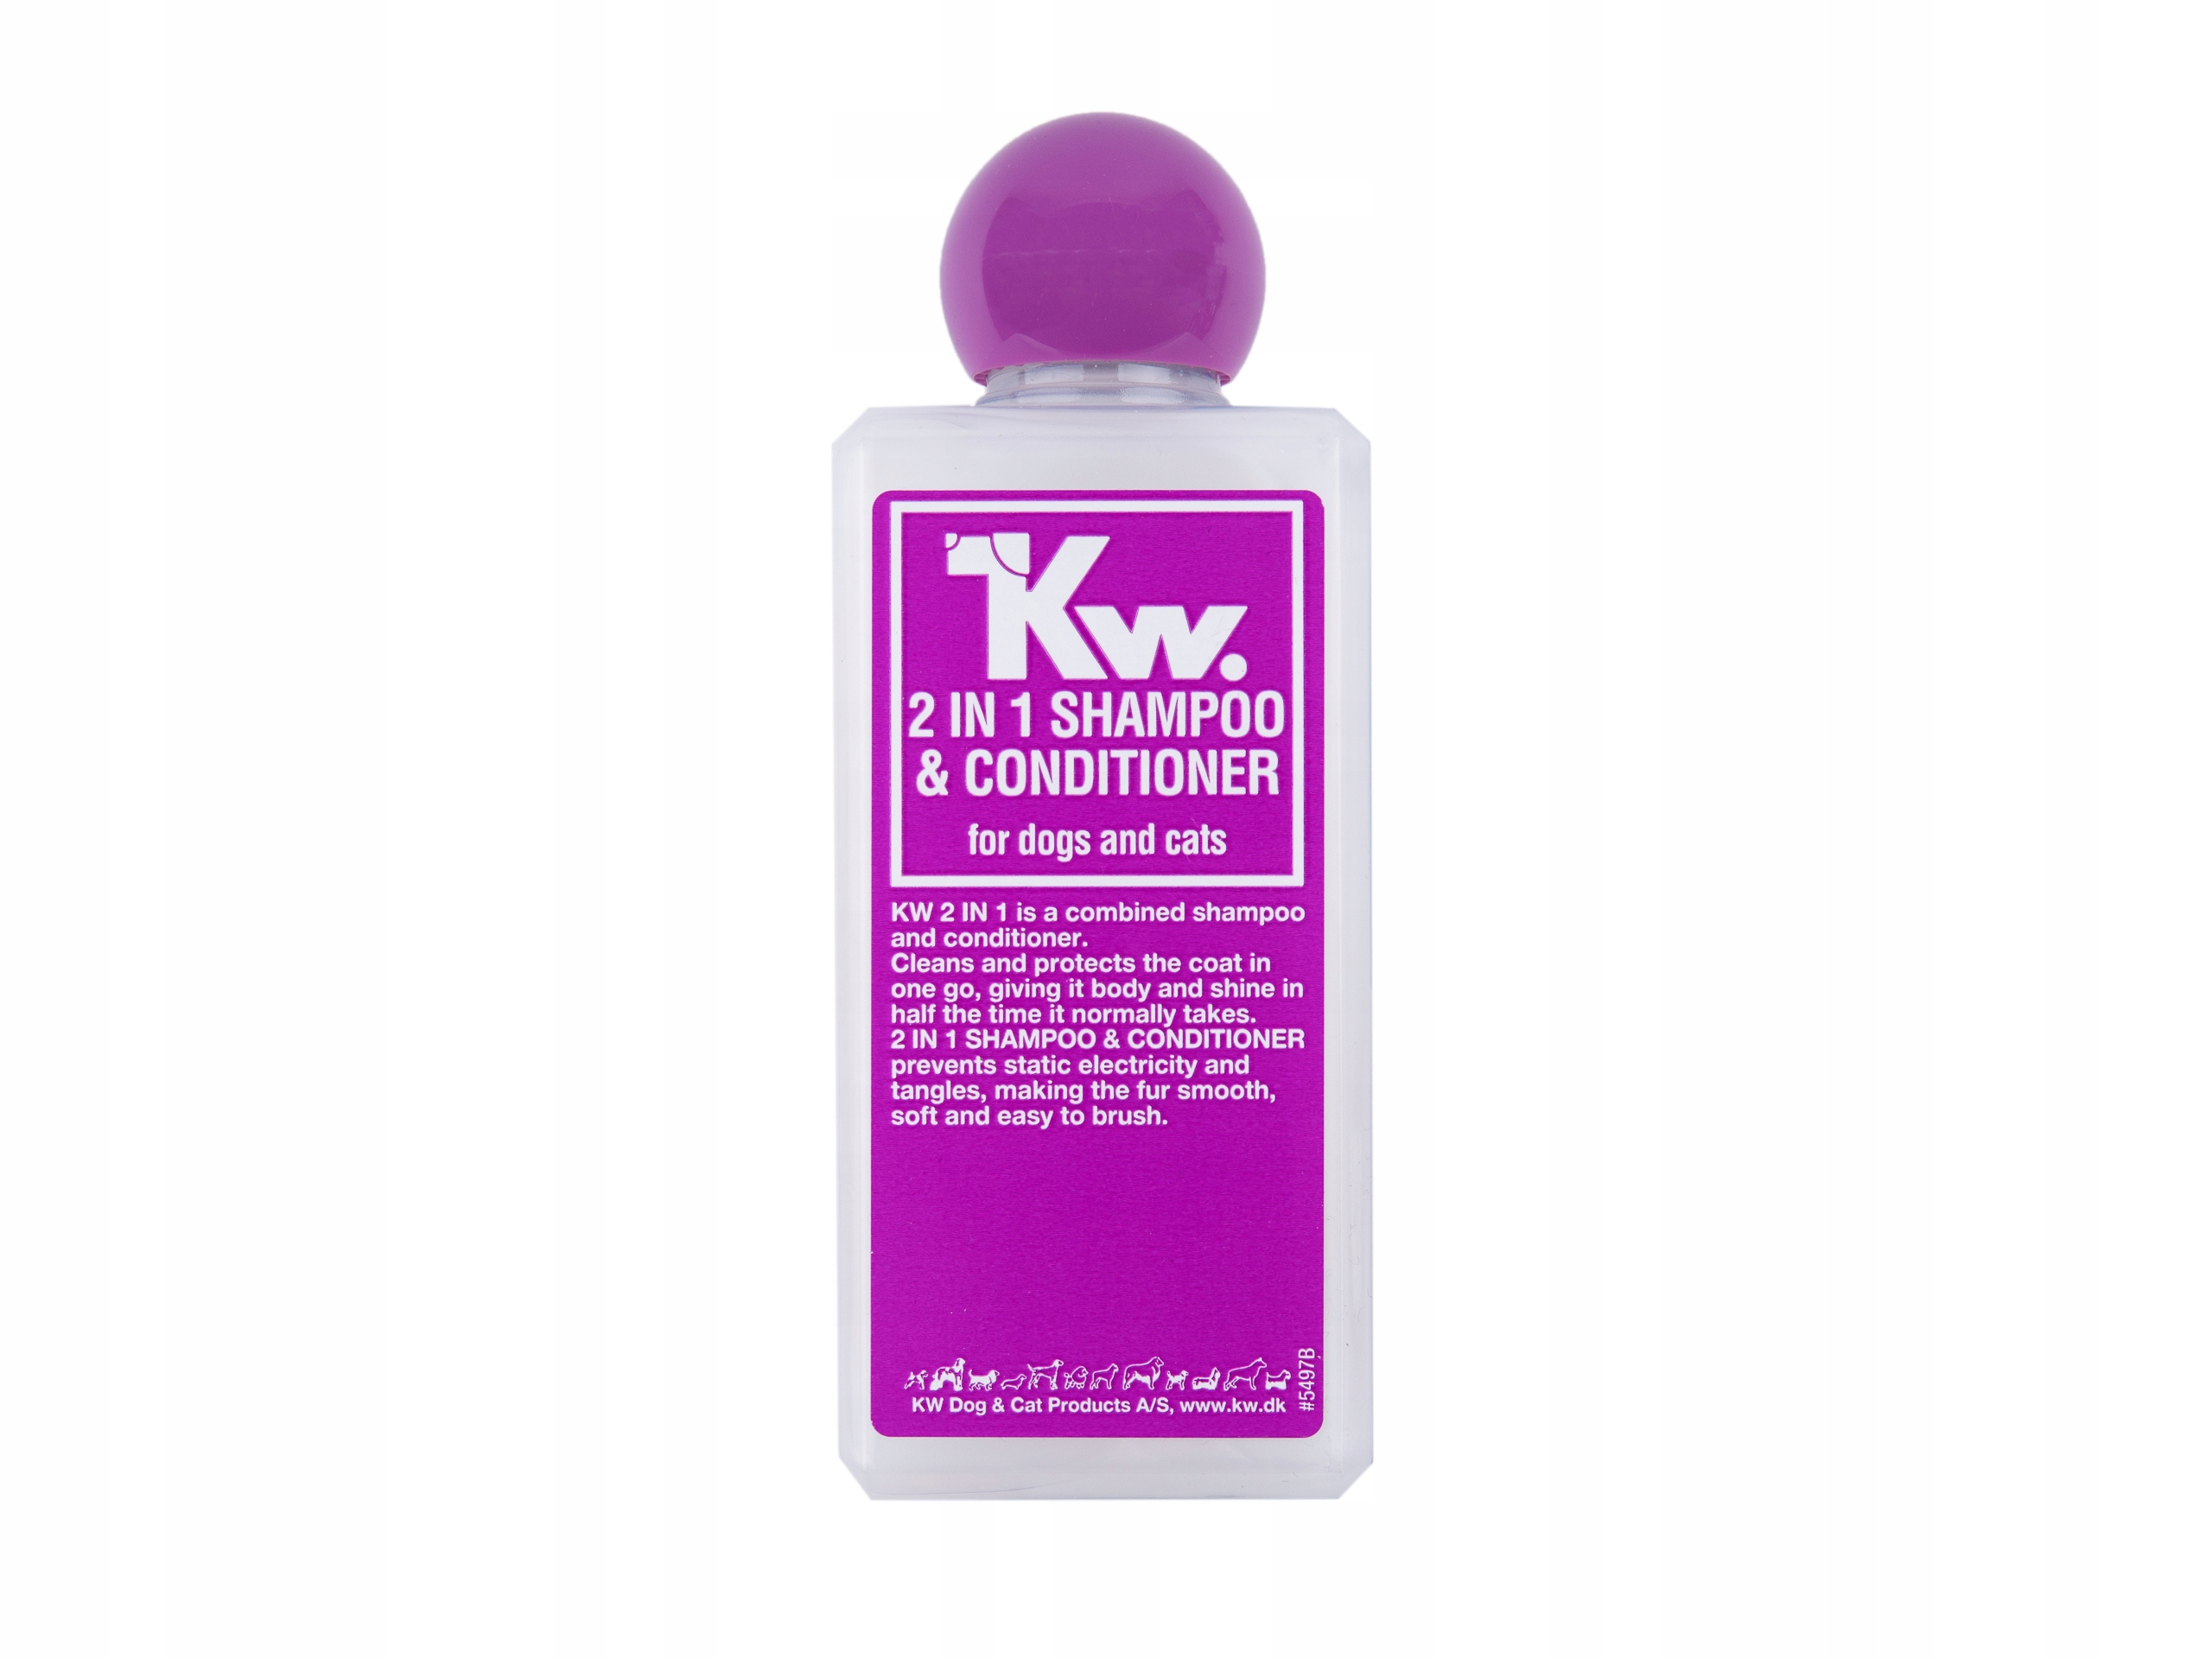 kw szampon